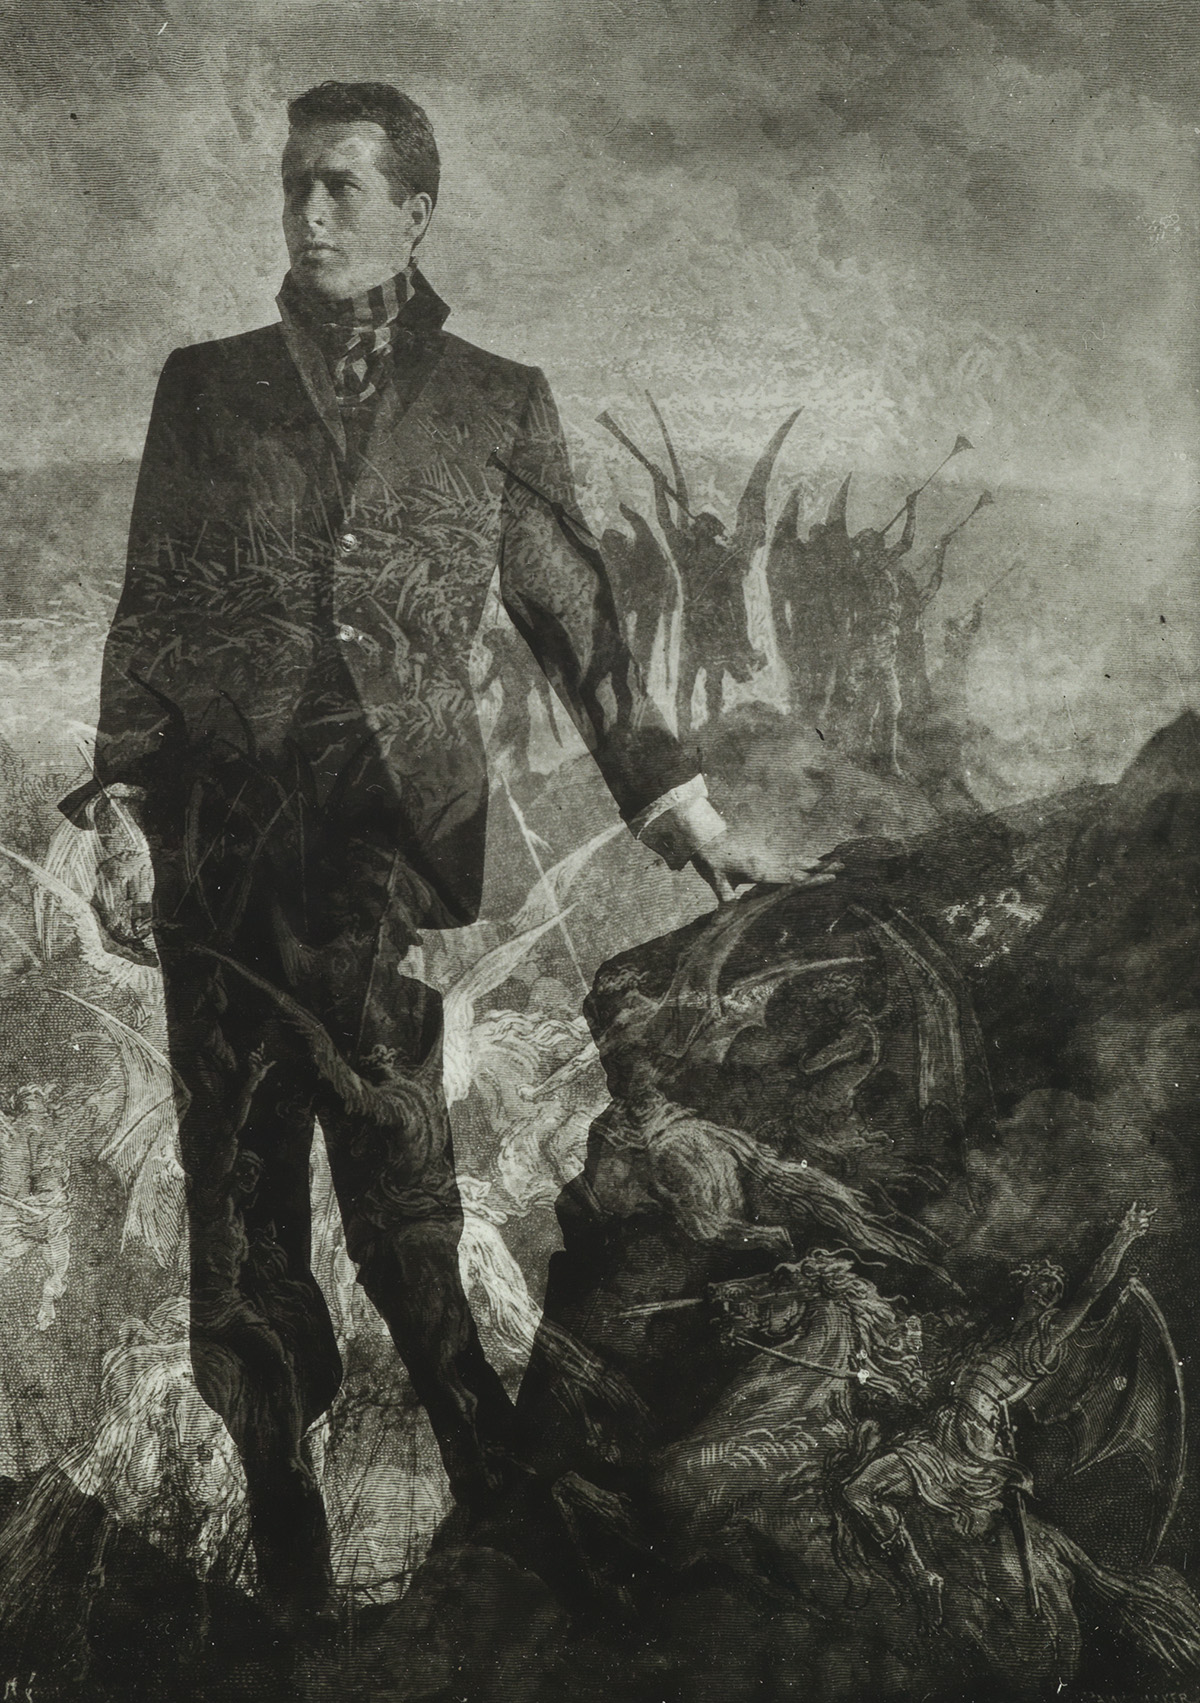 EDMUND TESKE (1911-1992) Kenneth Anger, Topanga Canyon (composite with Gustave Doré engraving).